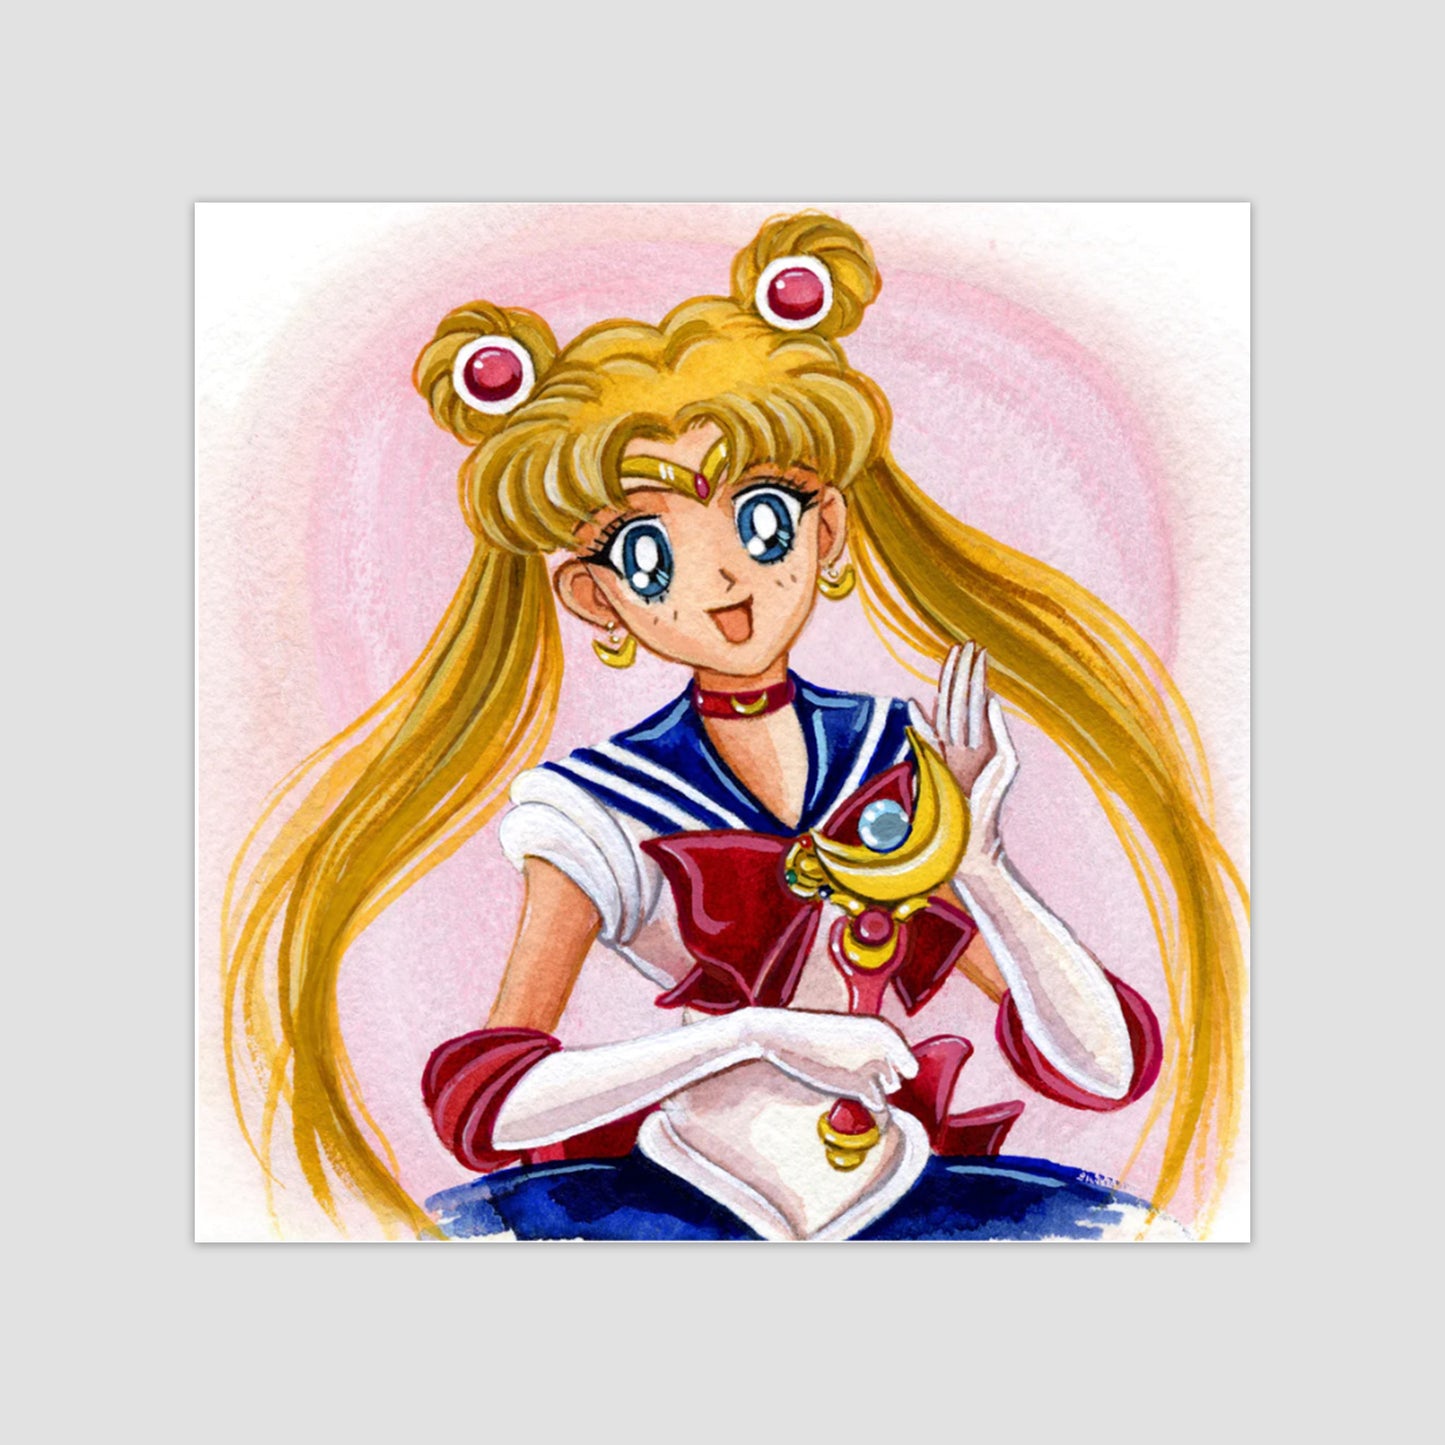 Sailor Moon T-Shirts - More Sailor Moon WaterColor Classic T-Shirt